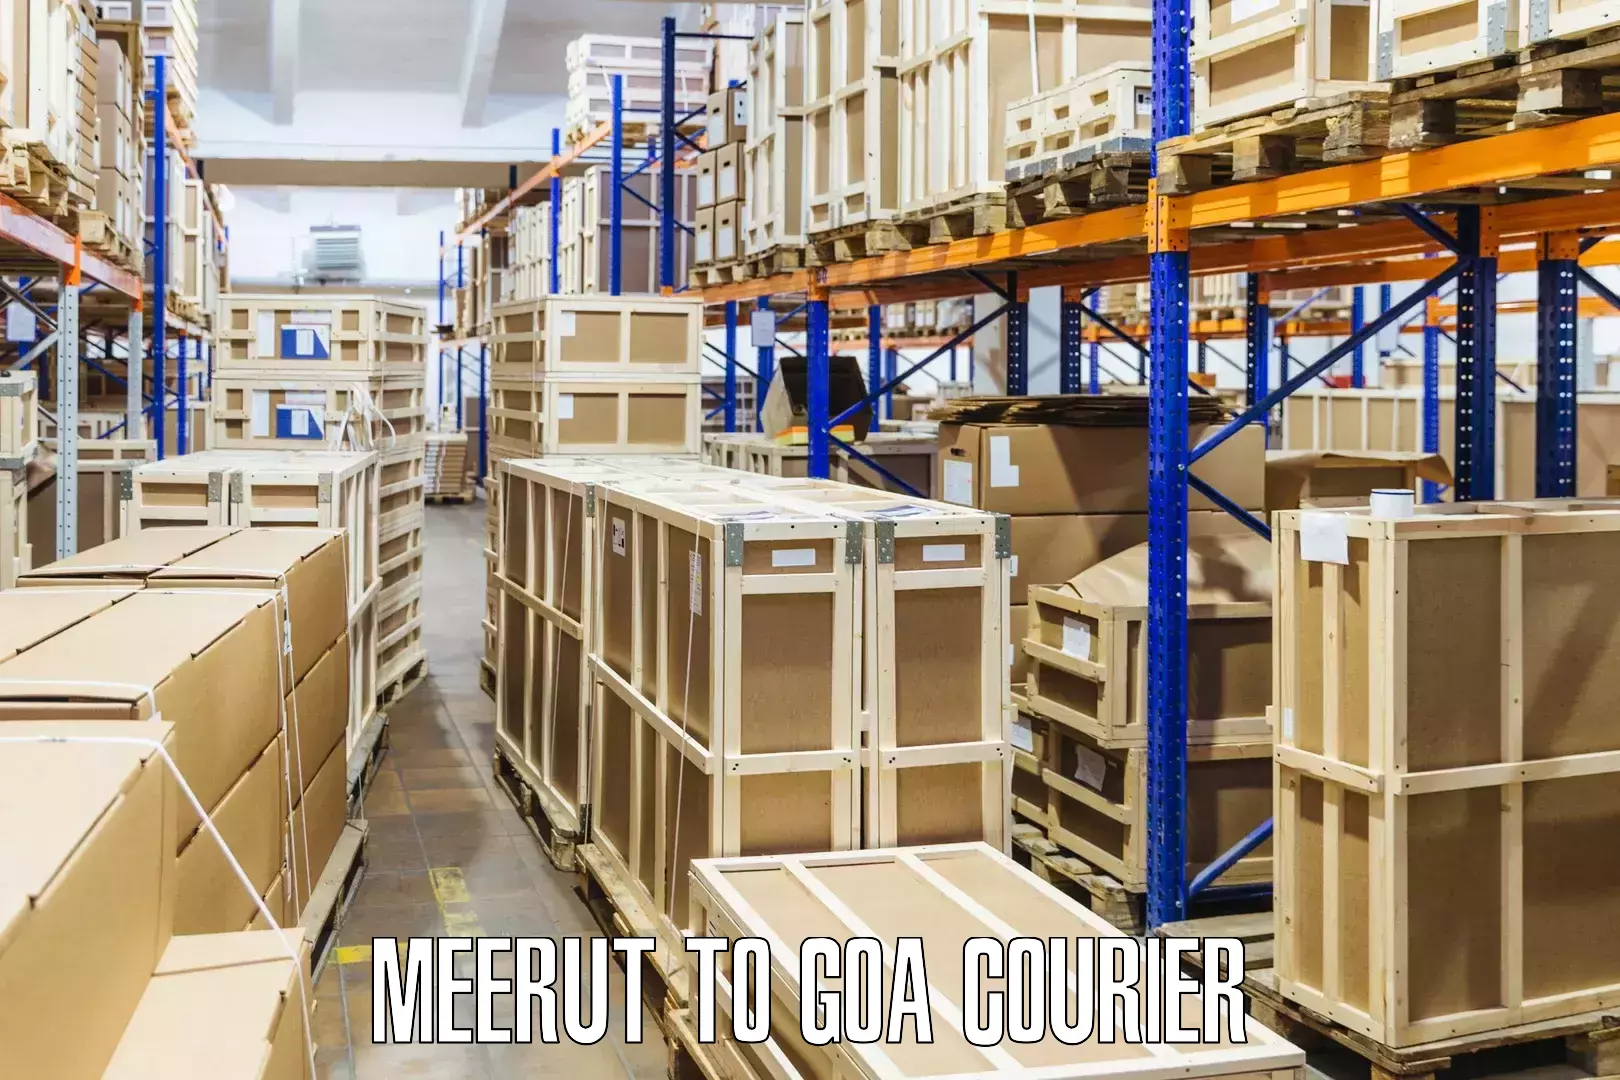 Courier service comparison Meerut to Goa